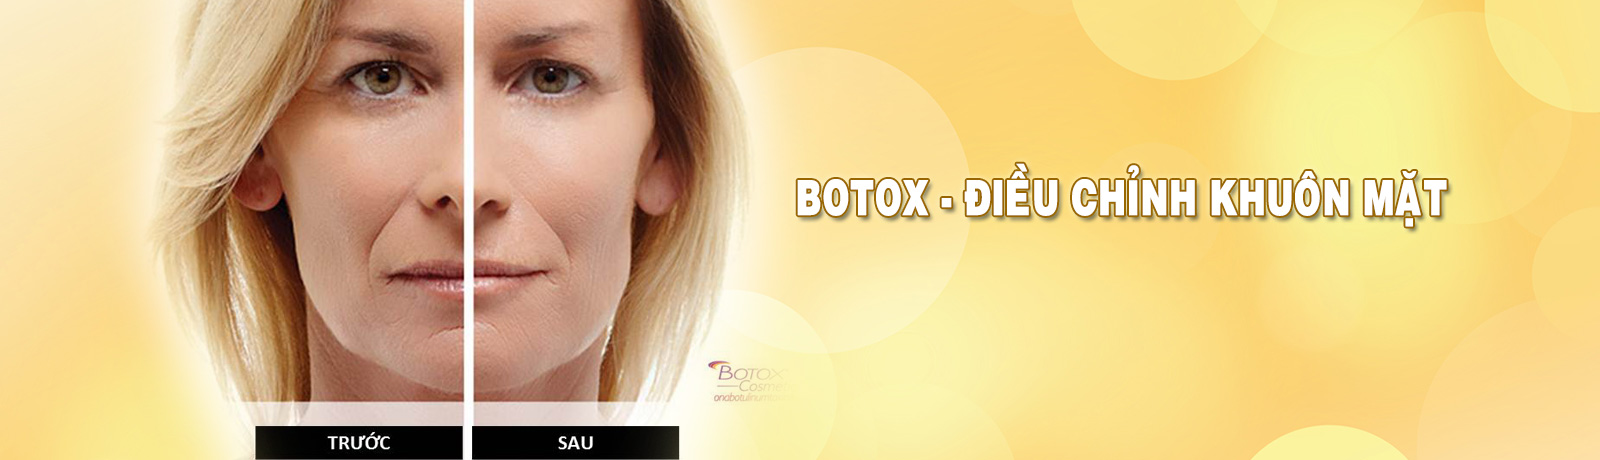 Slide 4 - Botox